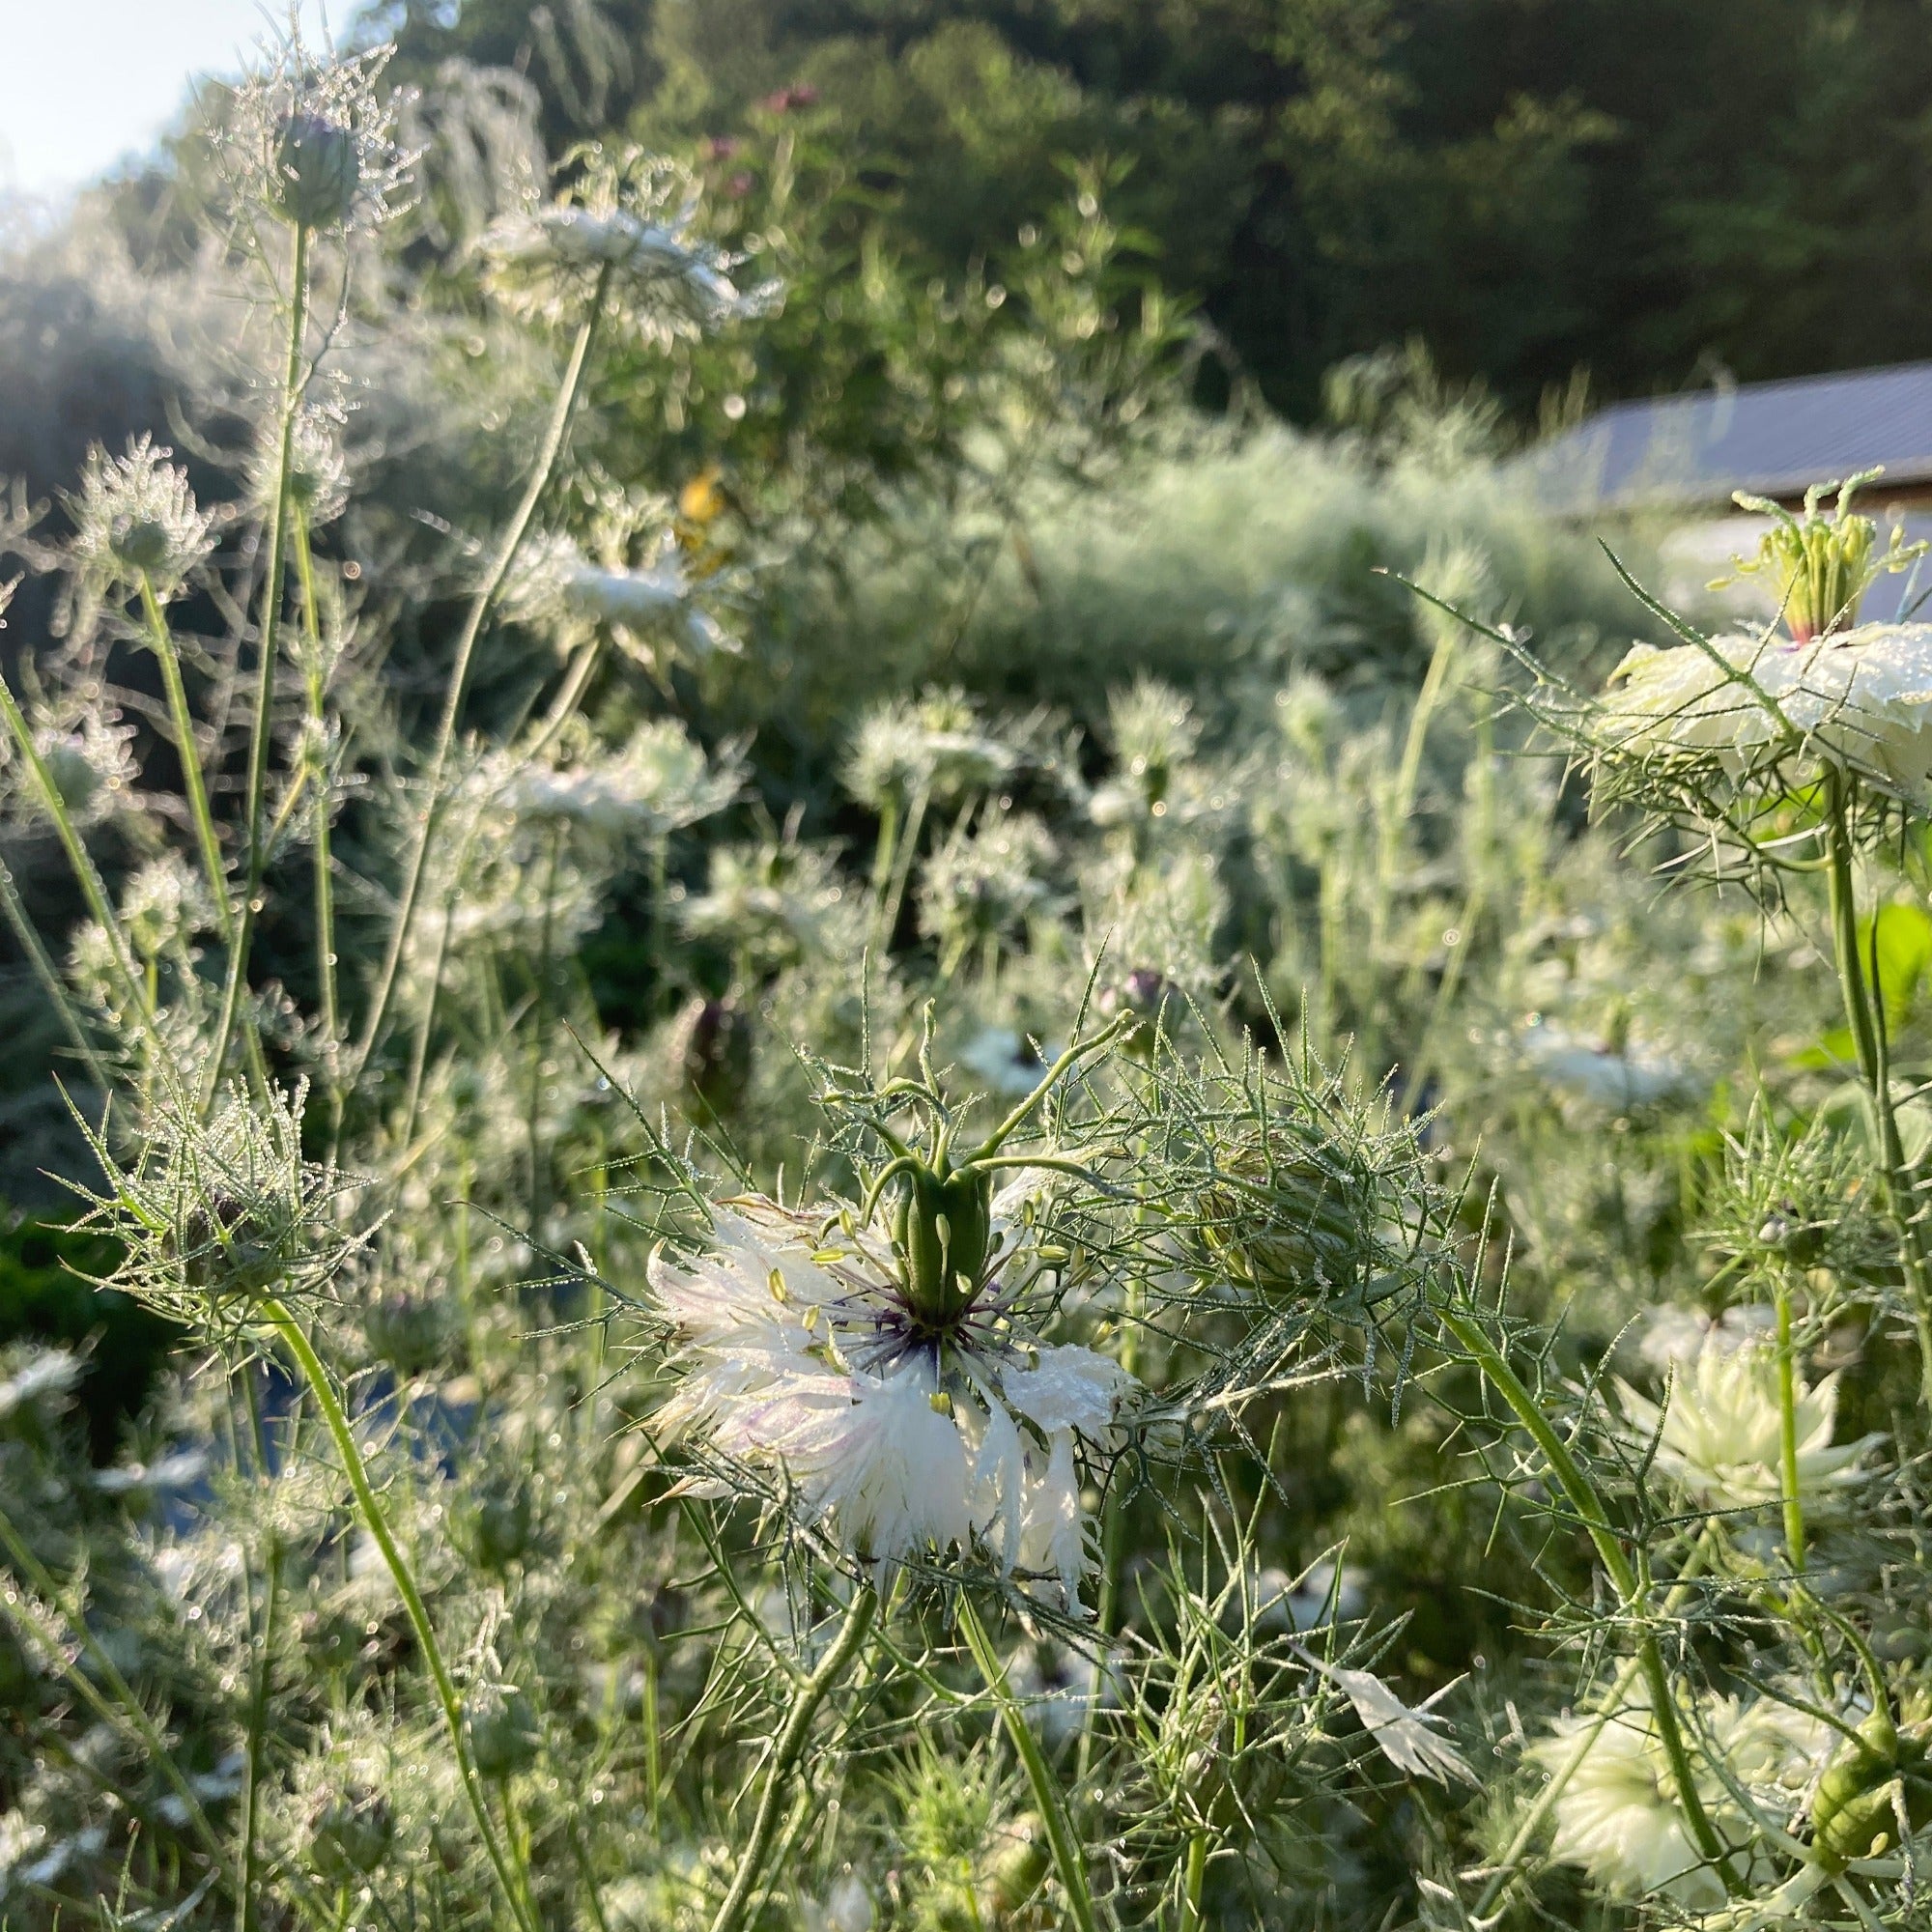 Miss Jekyll White Love-in-a-Mist Nigella Flowers in the morning dew in the garden